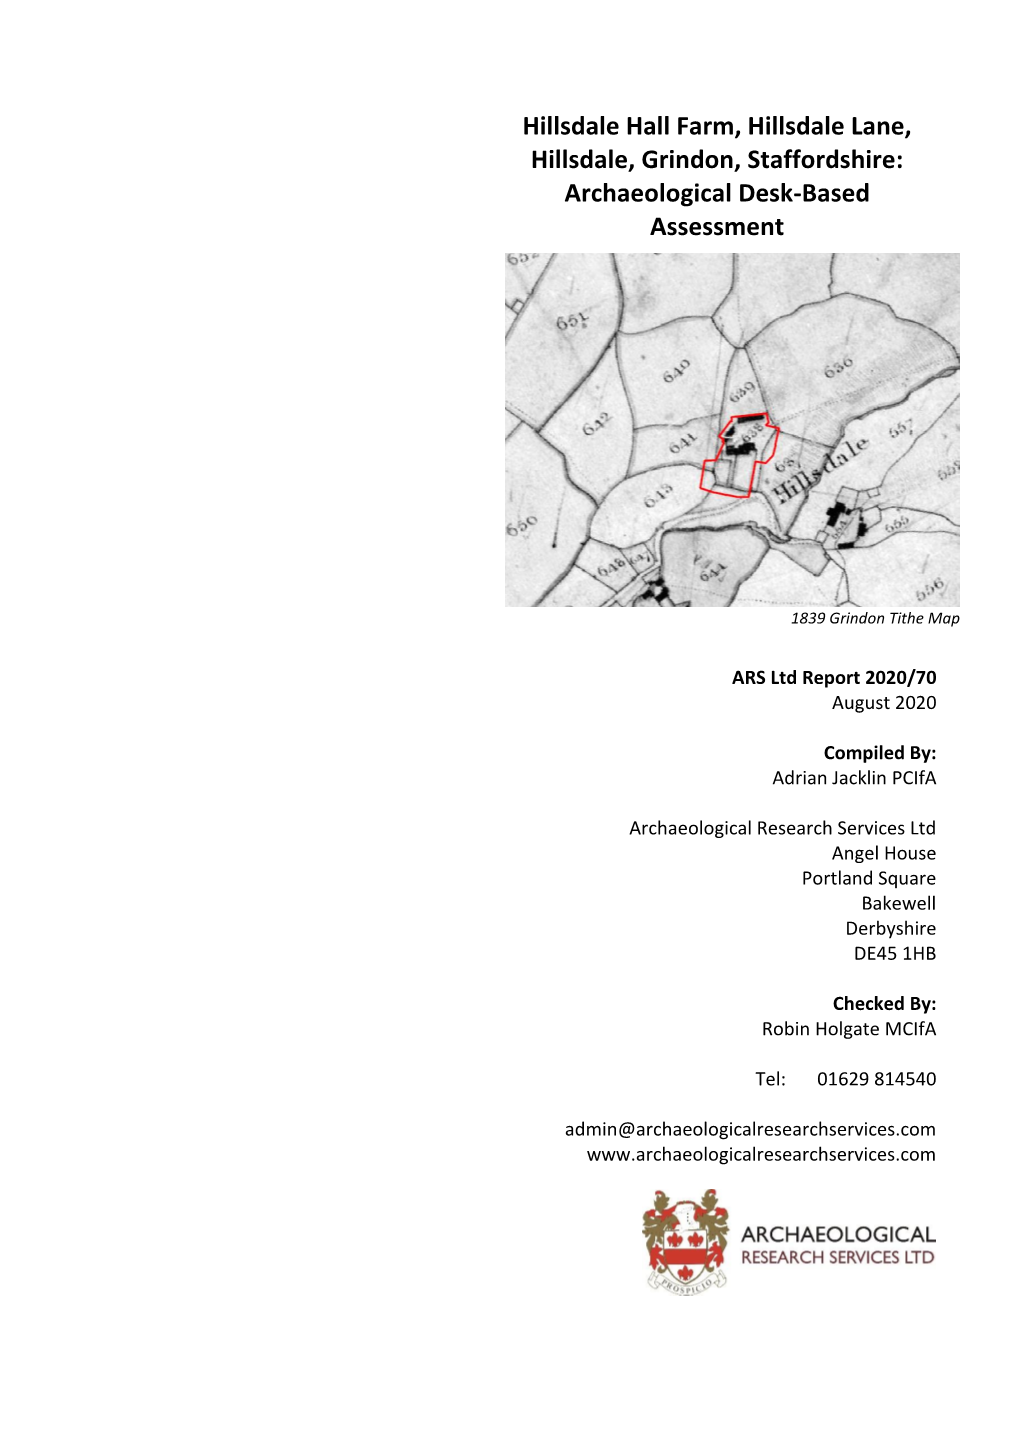 Hillsdale Hall Farm, Hillsdale Lane, Hillsdale, Grindon, Staffordshire: Archaeological Desk-Based Assessment